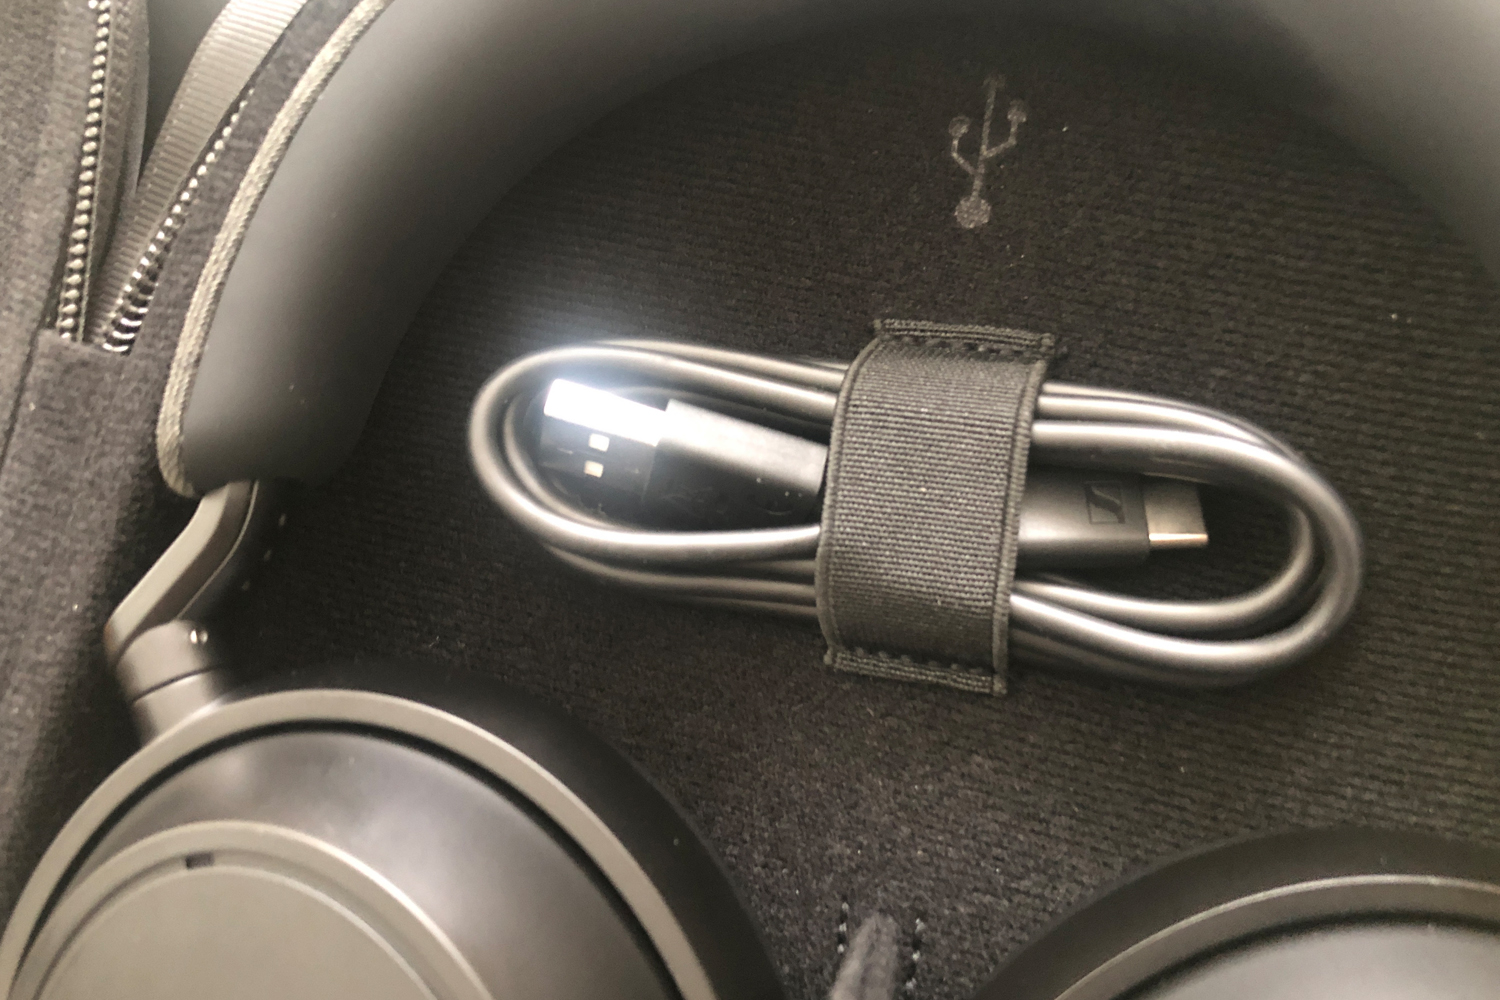 Sennheiser Momentum 4 headphones USB cable